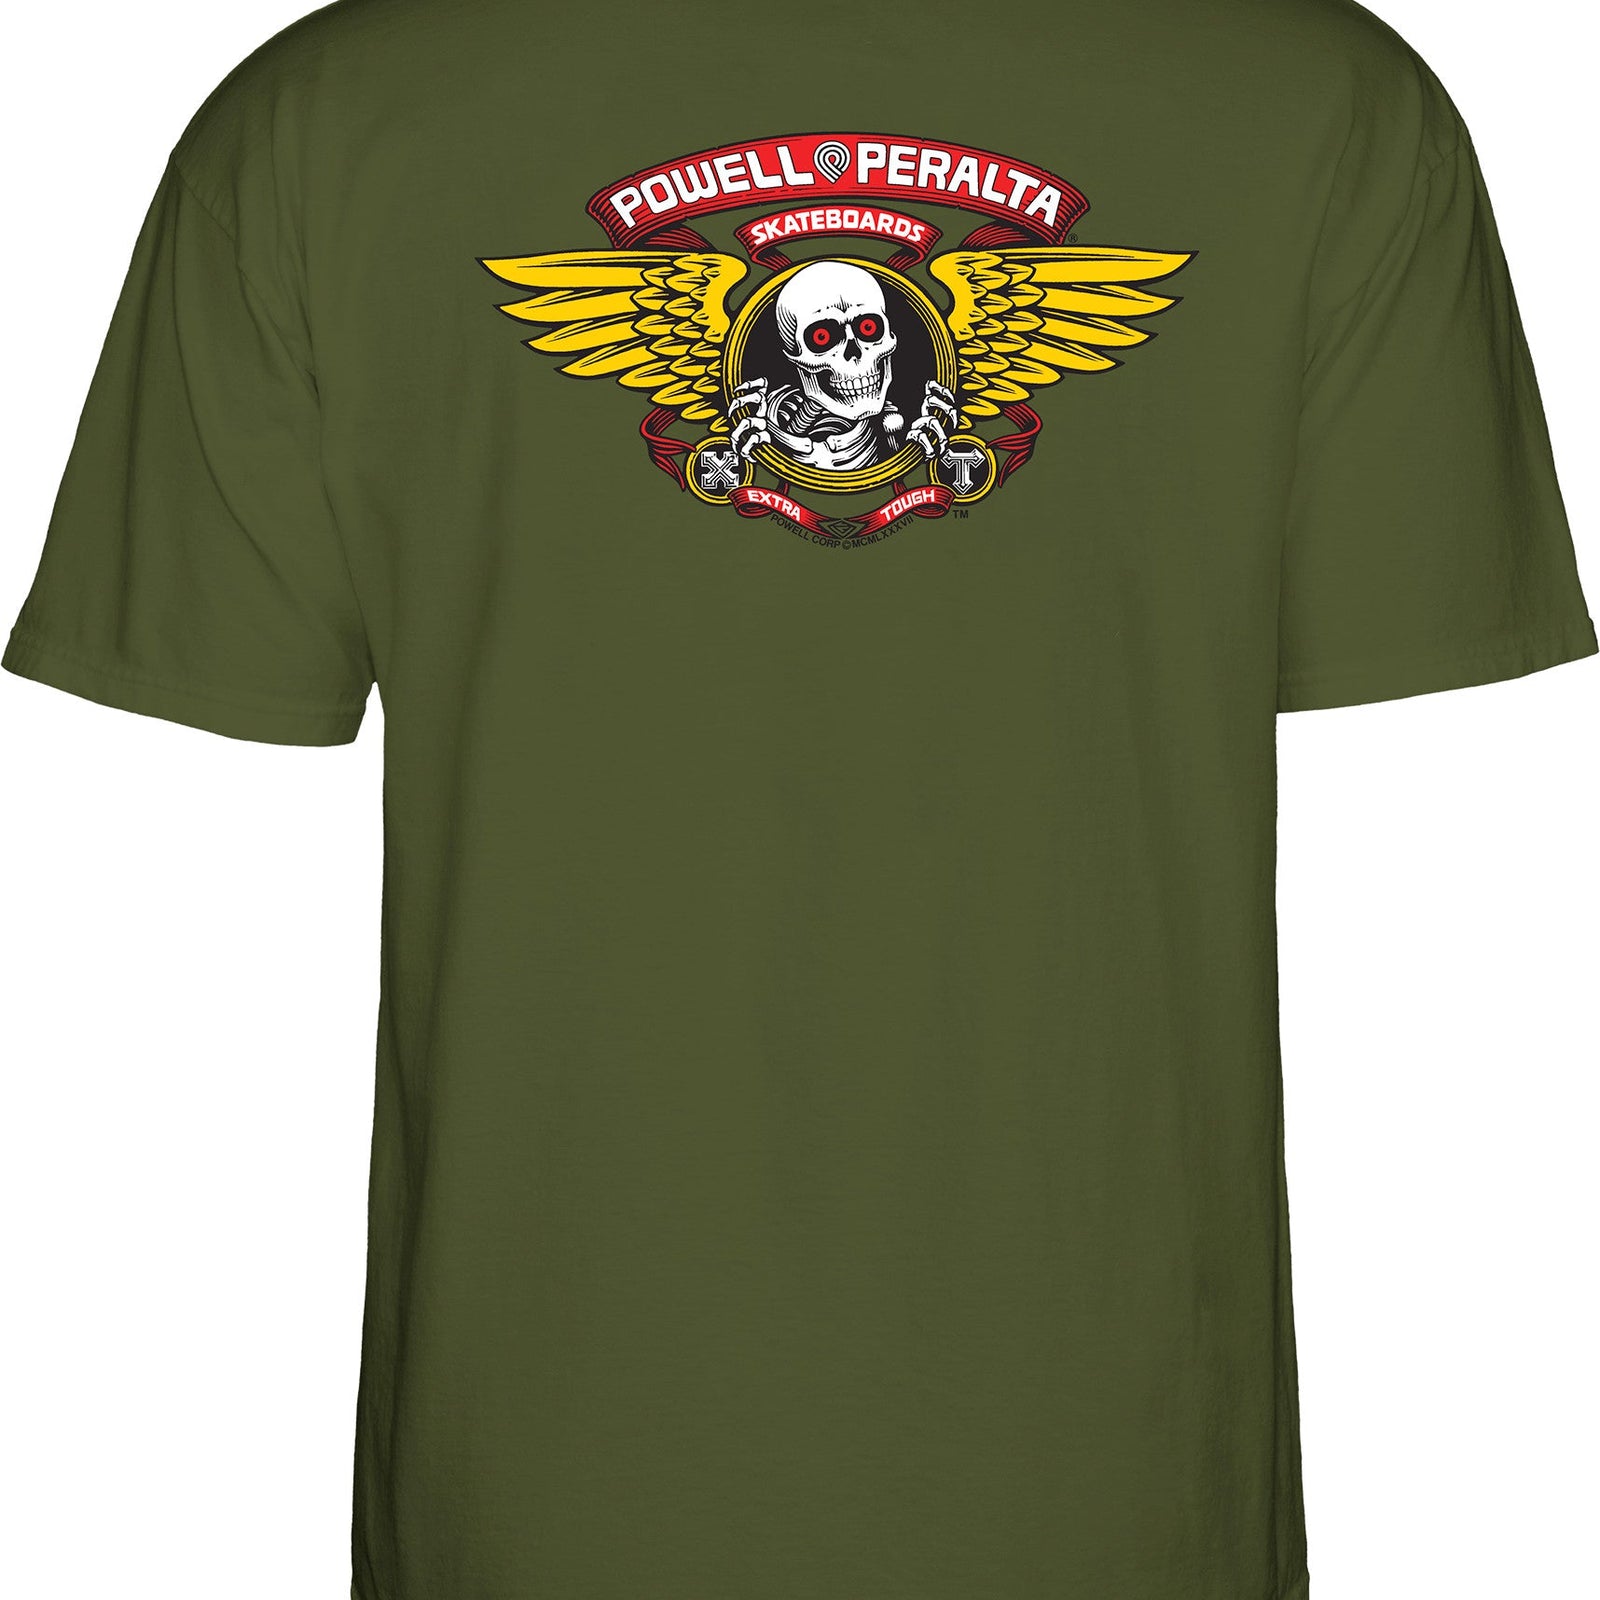 T-shirt Powell-Peralta™Winged Ripper Military Green